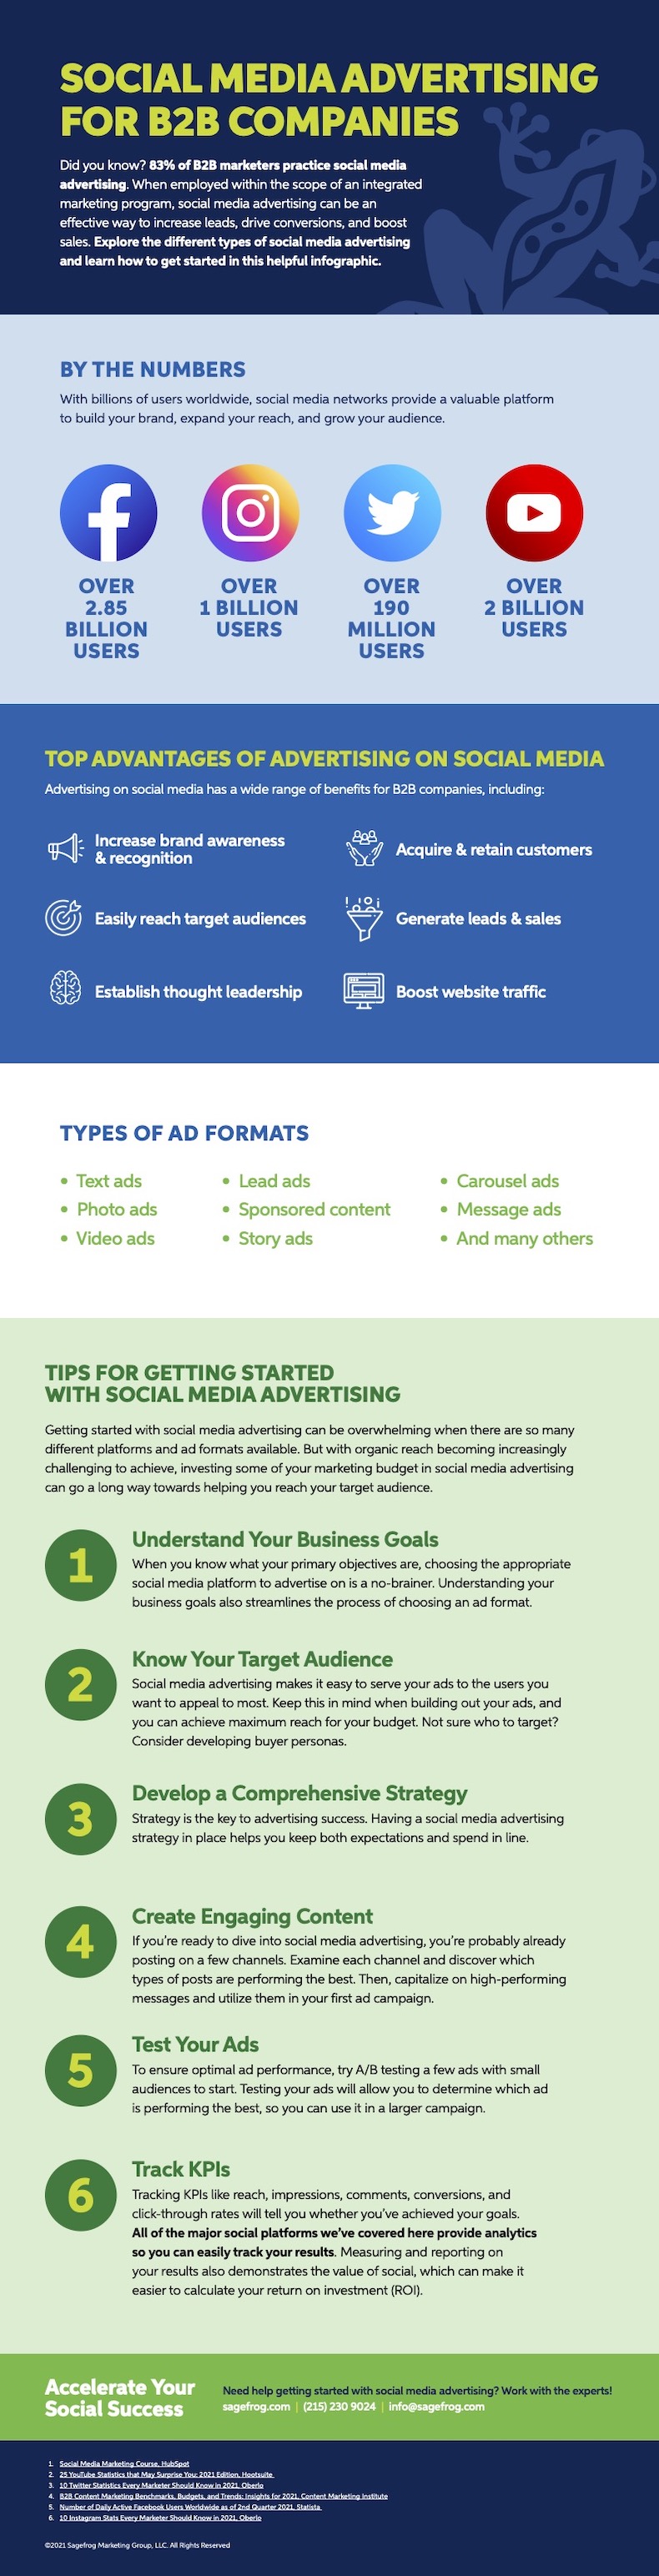 Social media advertising for B2B companies infographic